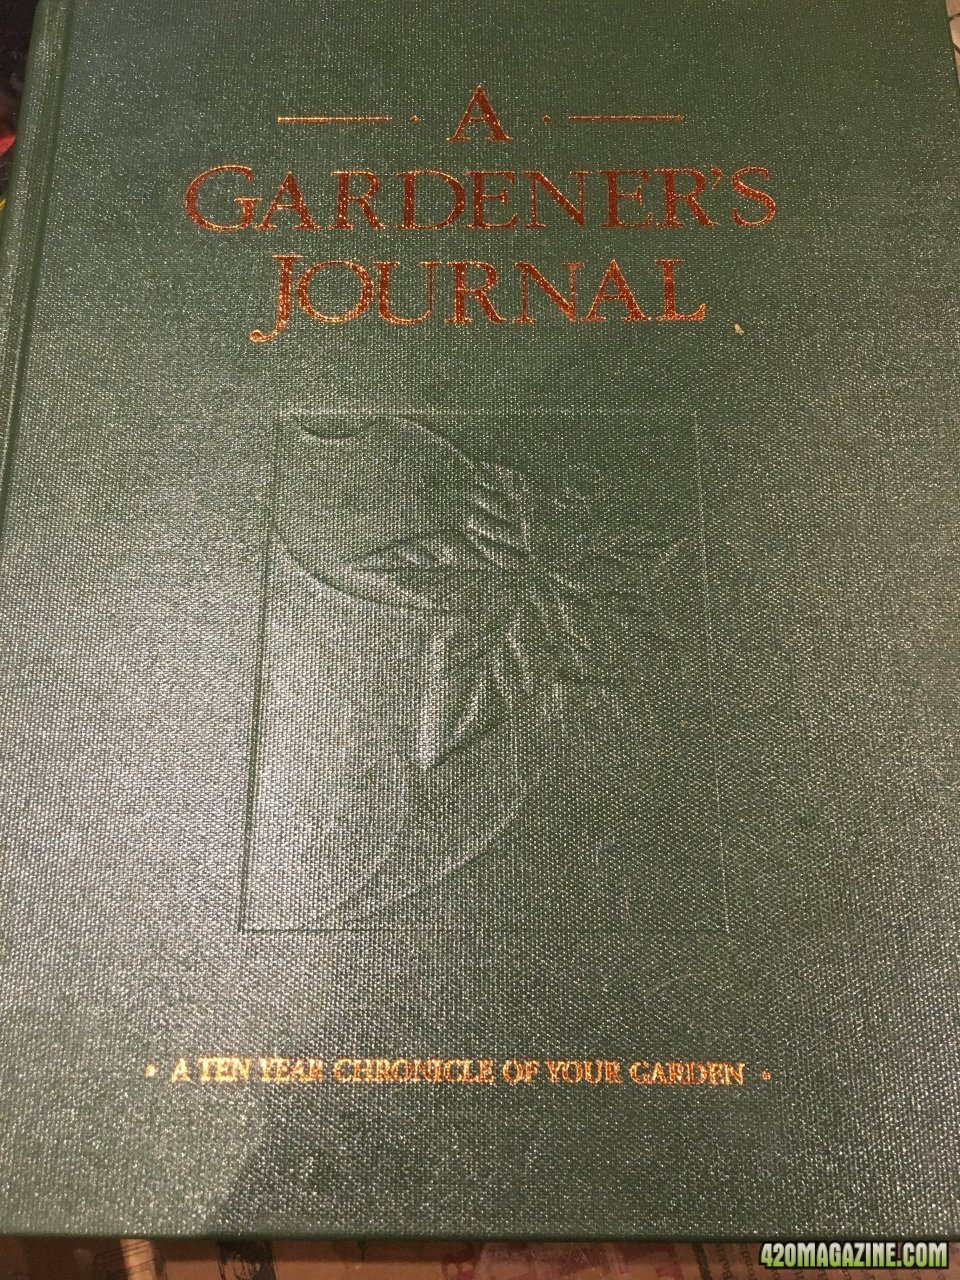 Gardeners Journal - from LeeValley Canada